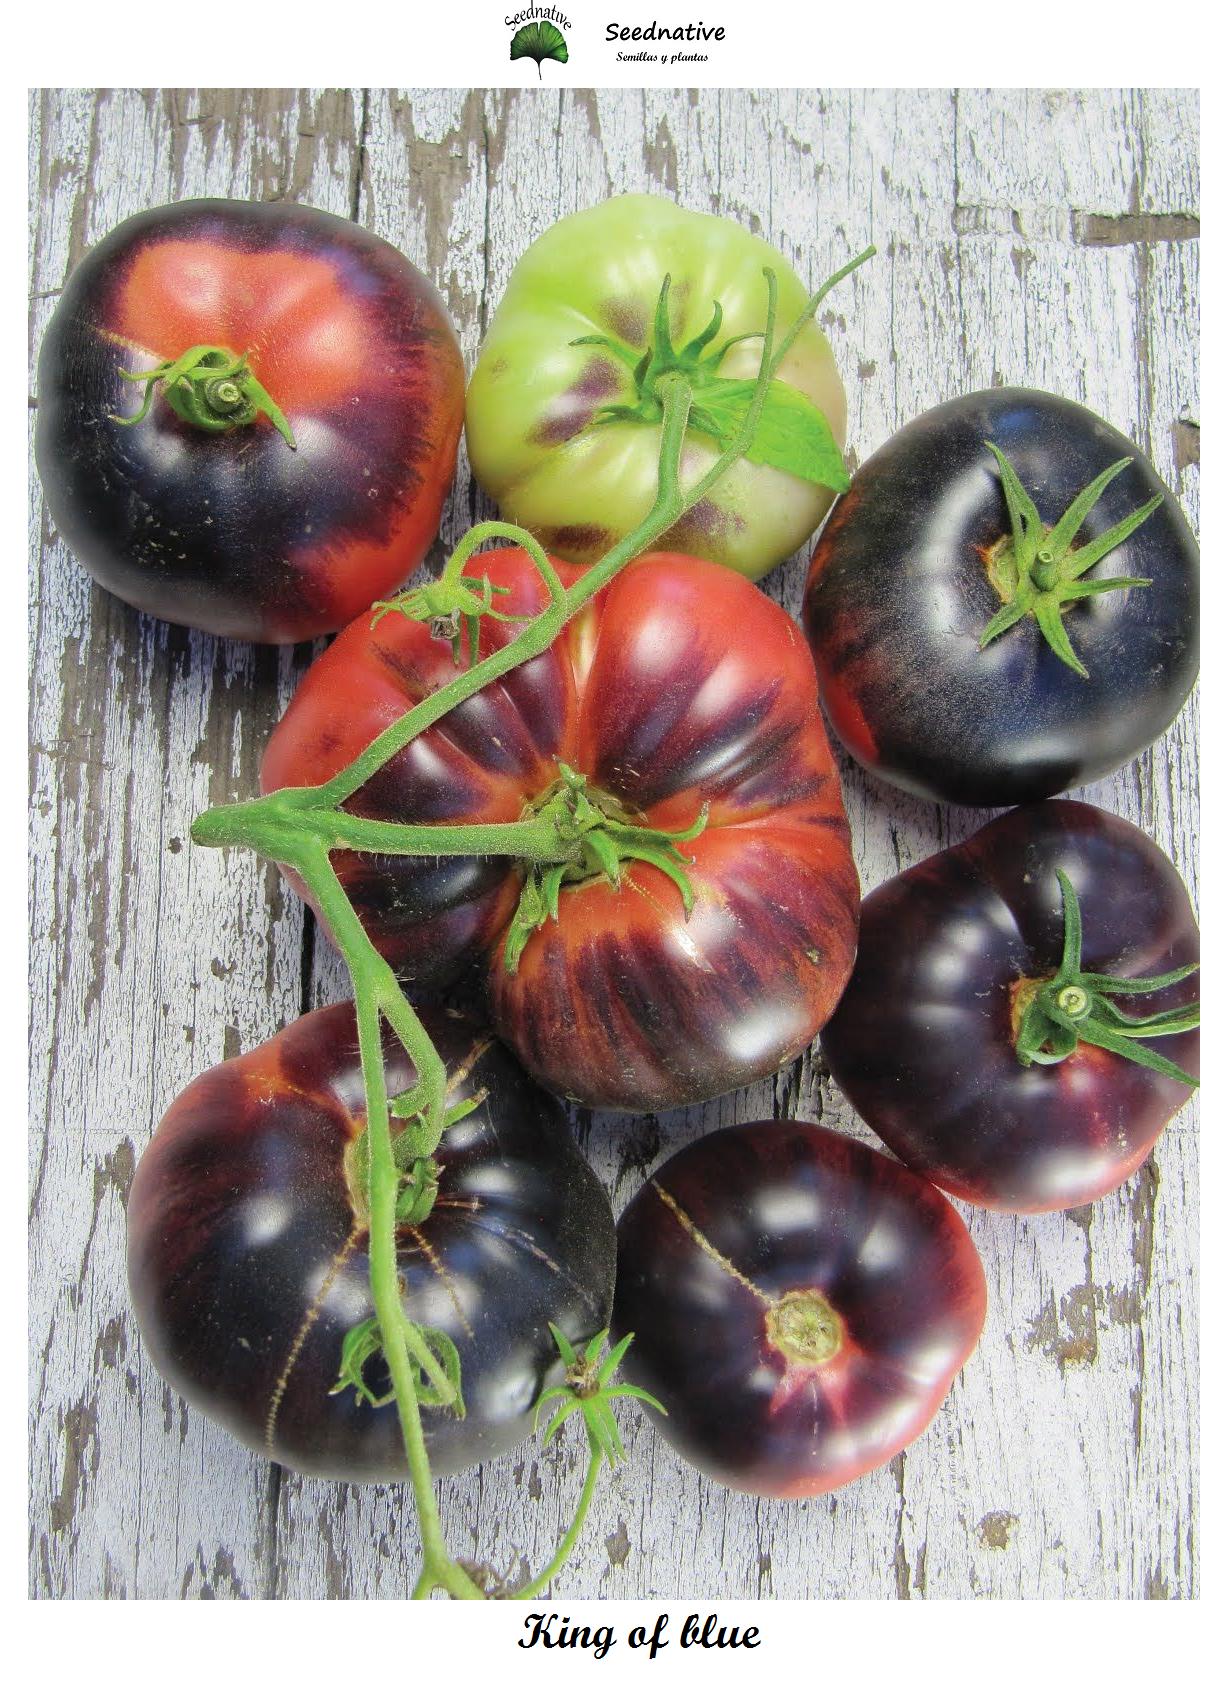 Tomate King of blue - Var. Especial - 10 semillas